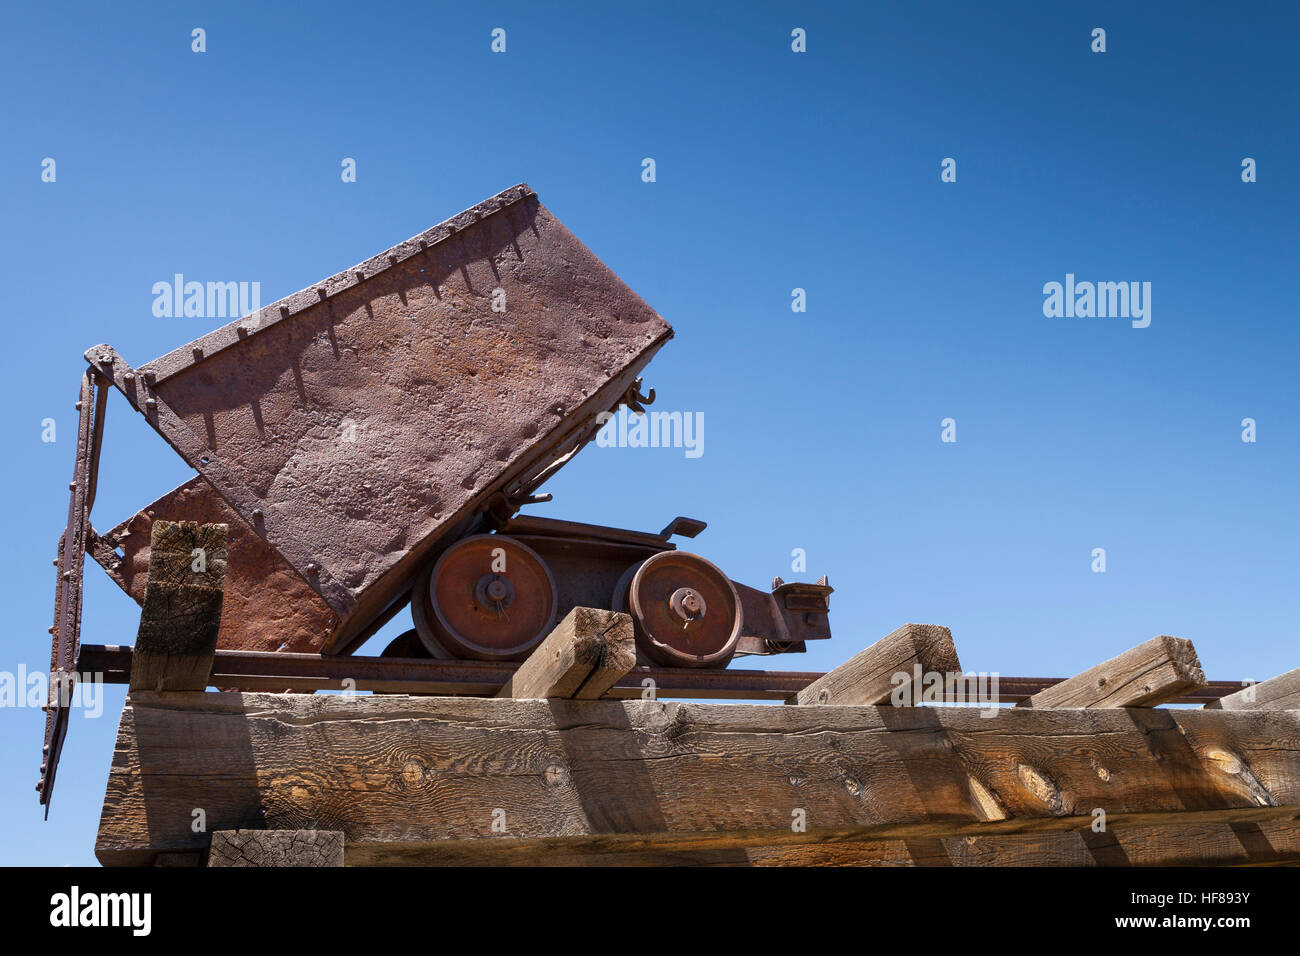 Old rusty mining ore cart on trestle under blue sky. Stock Photo